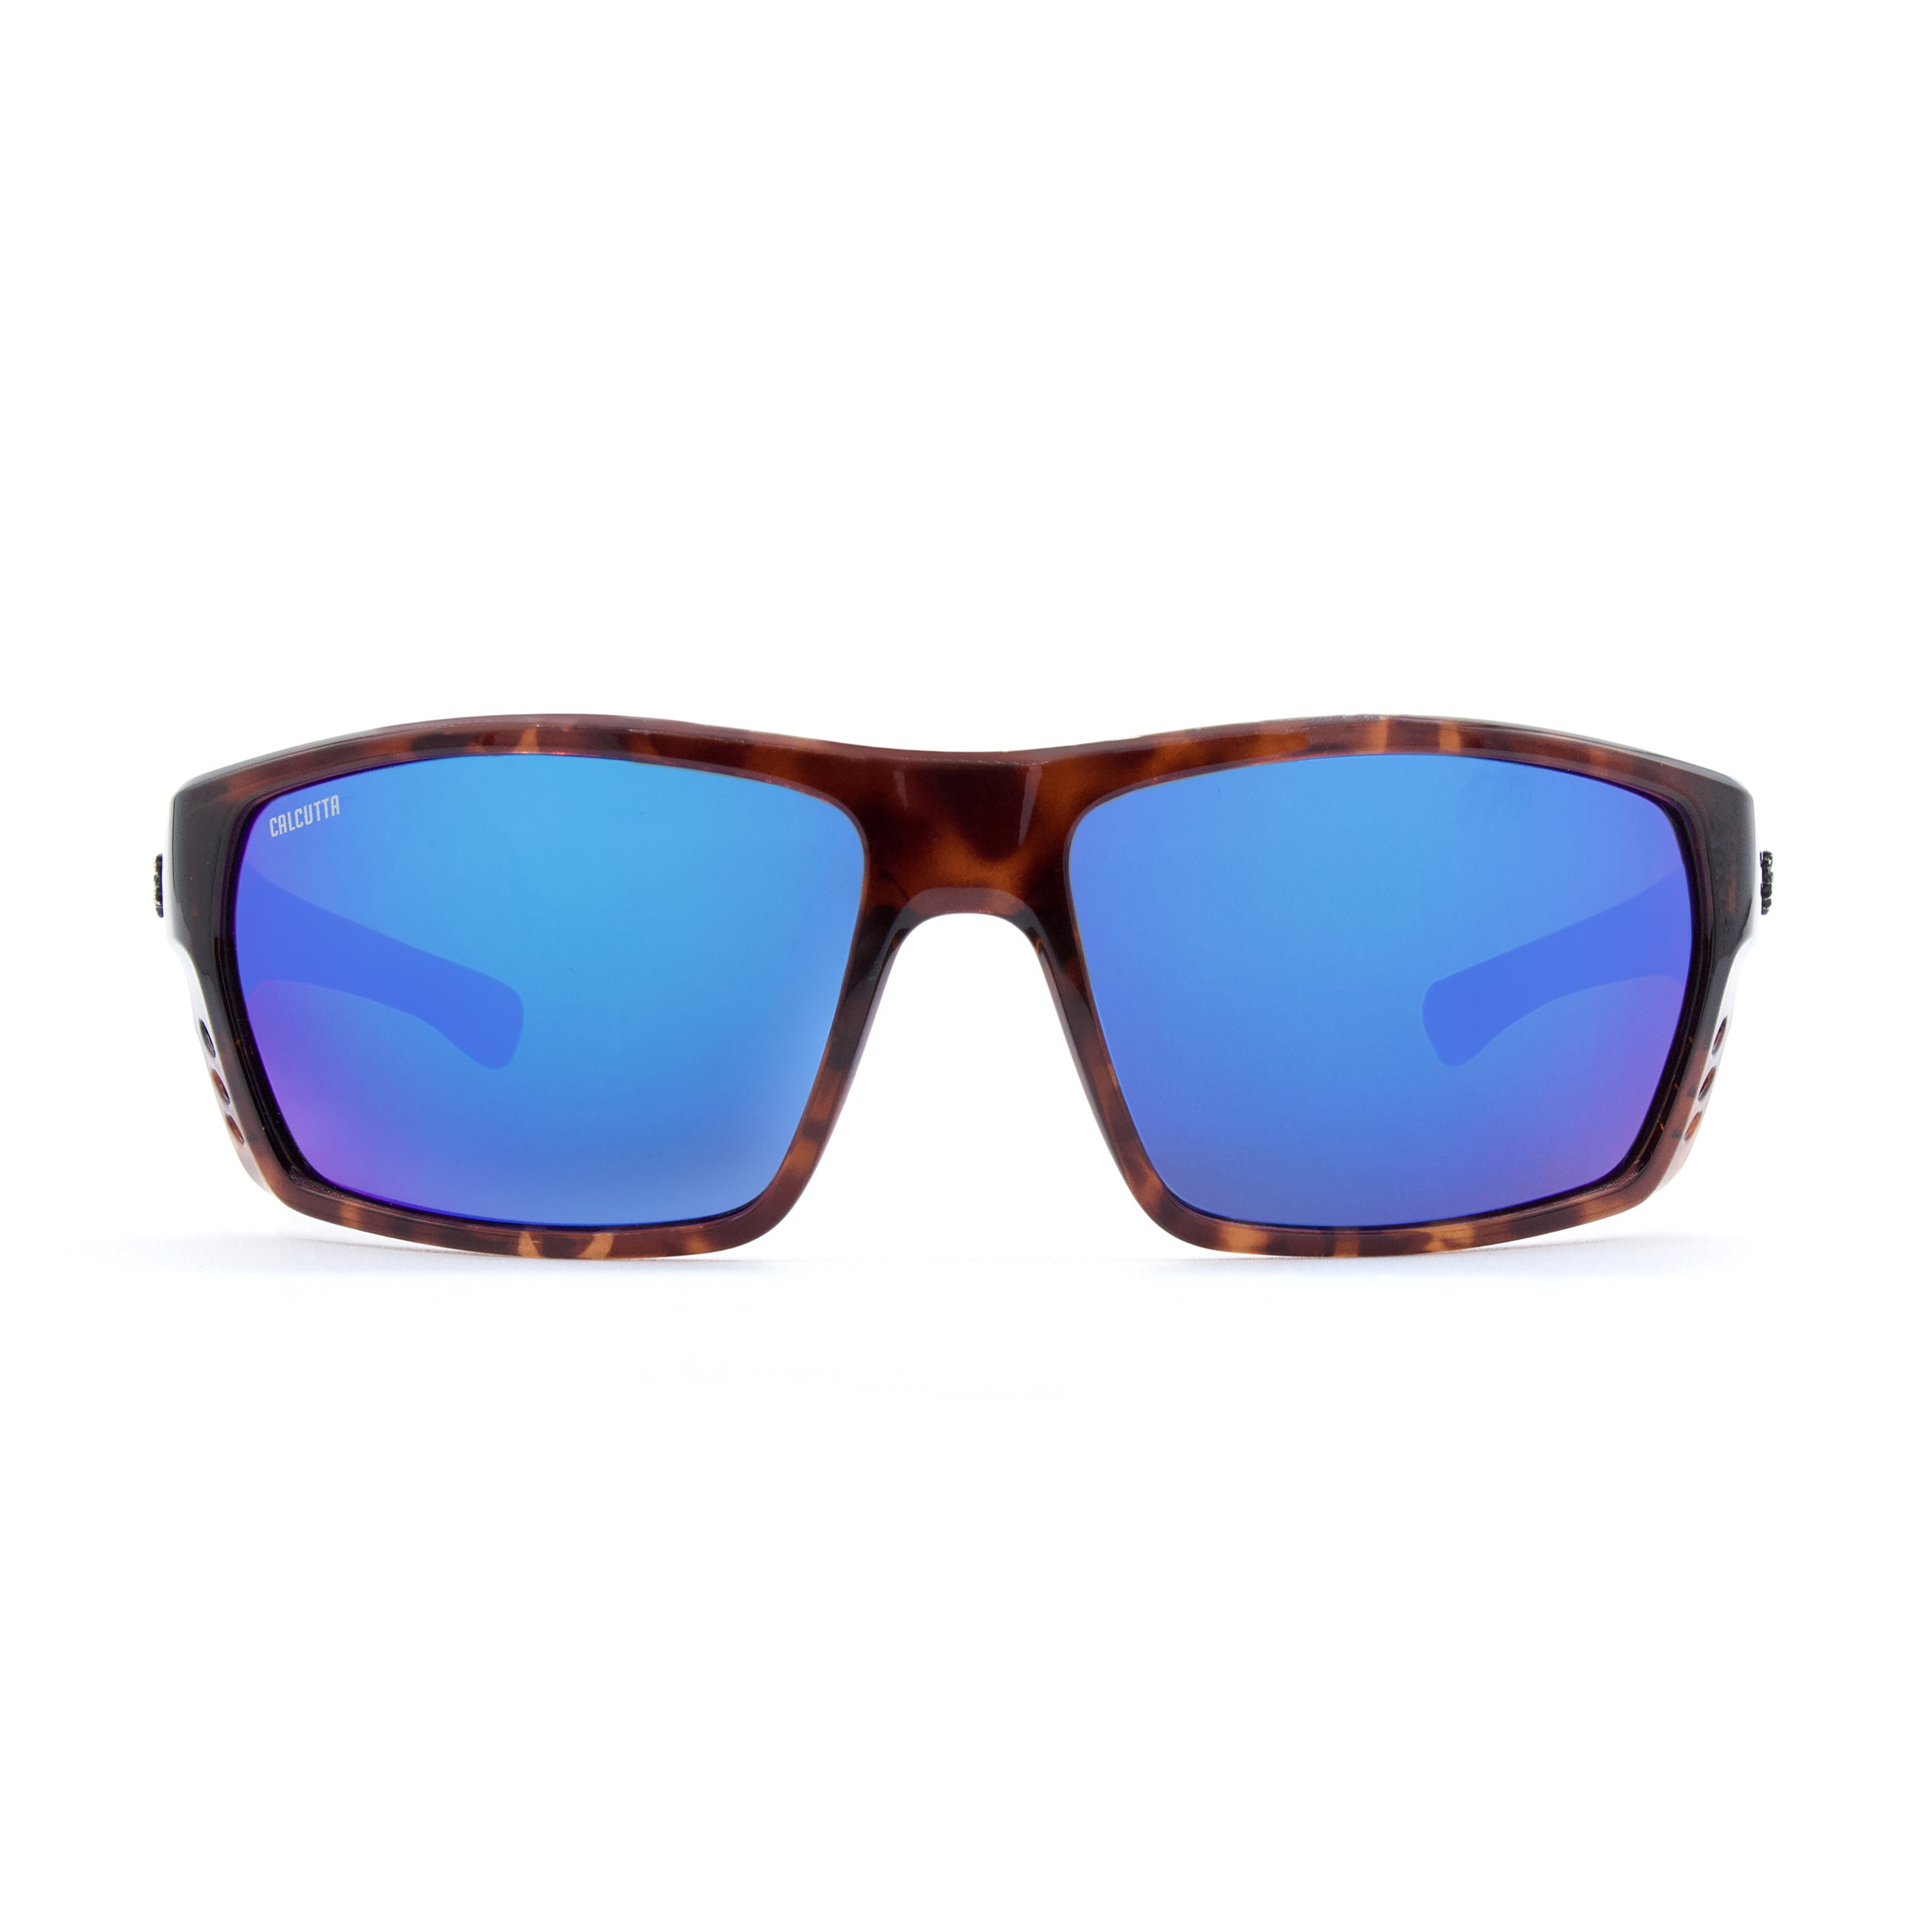 Calcutta Fathom sunglasses tortoise blue mirror front